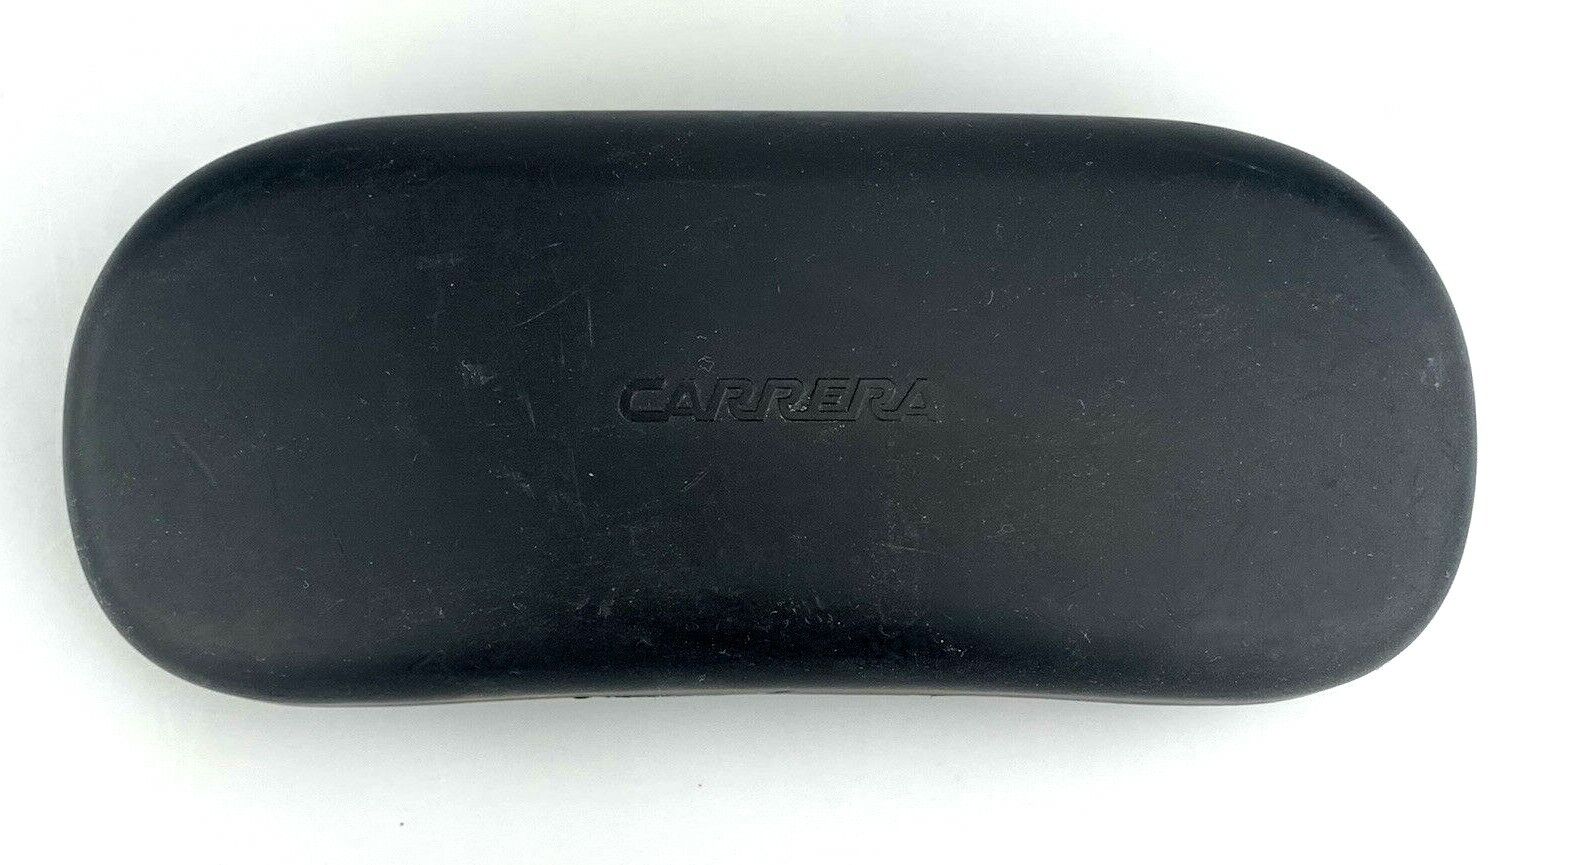 Carrera Sunglasses Eyeglasses Case Black Clamshell Hard Case Vintage Made Italy